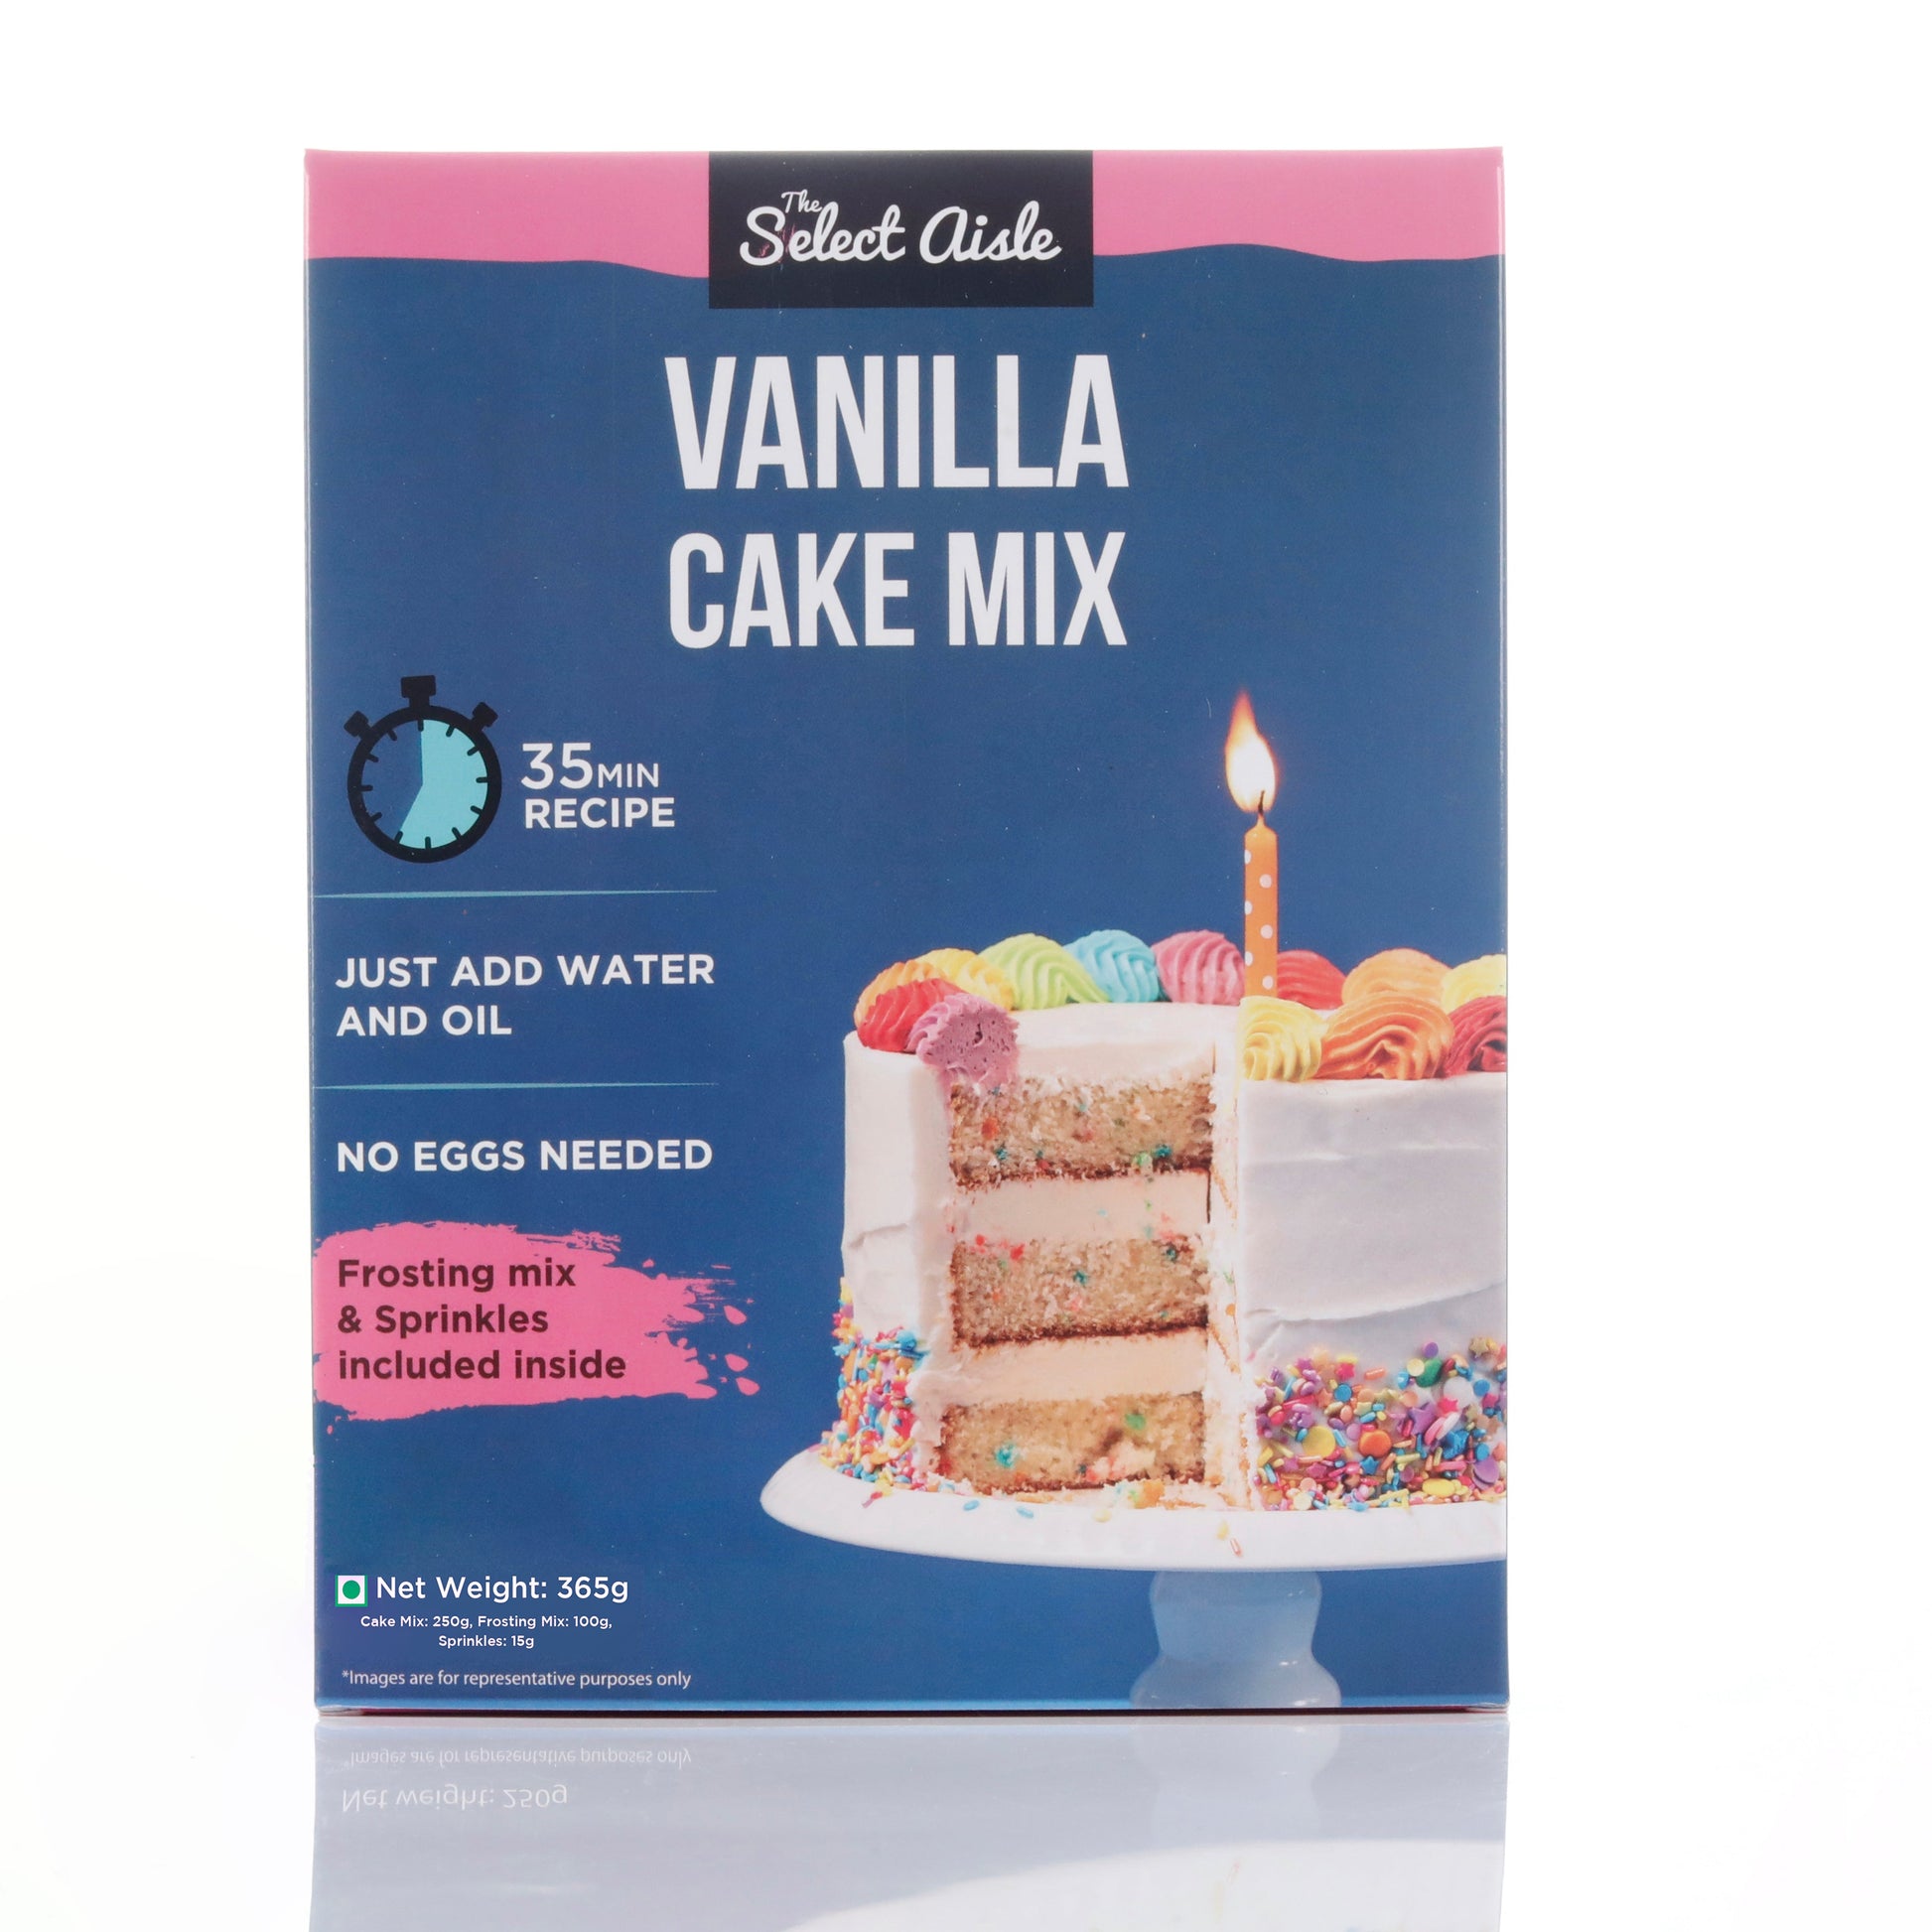 Vanilla cake mix + Tin The Select Aisle